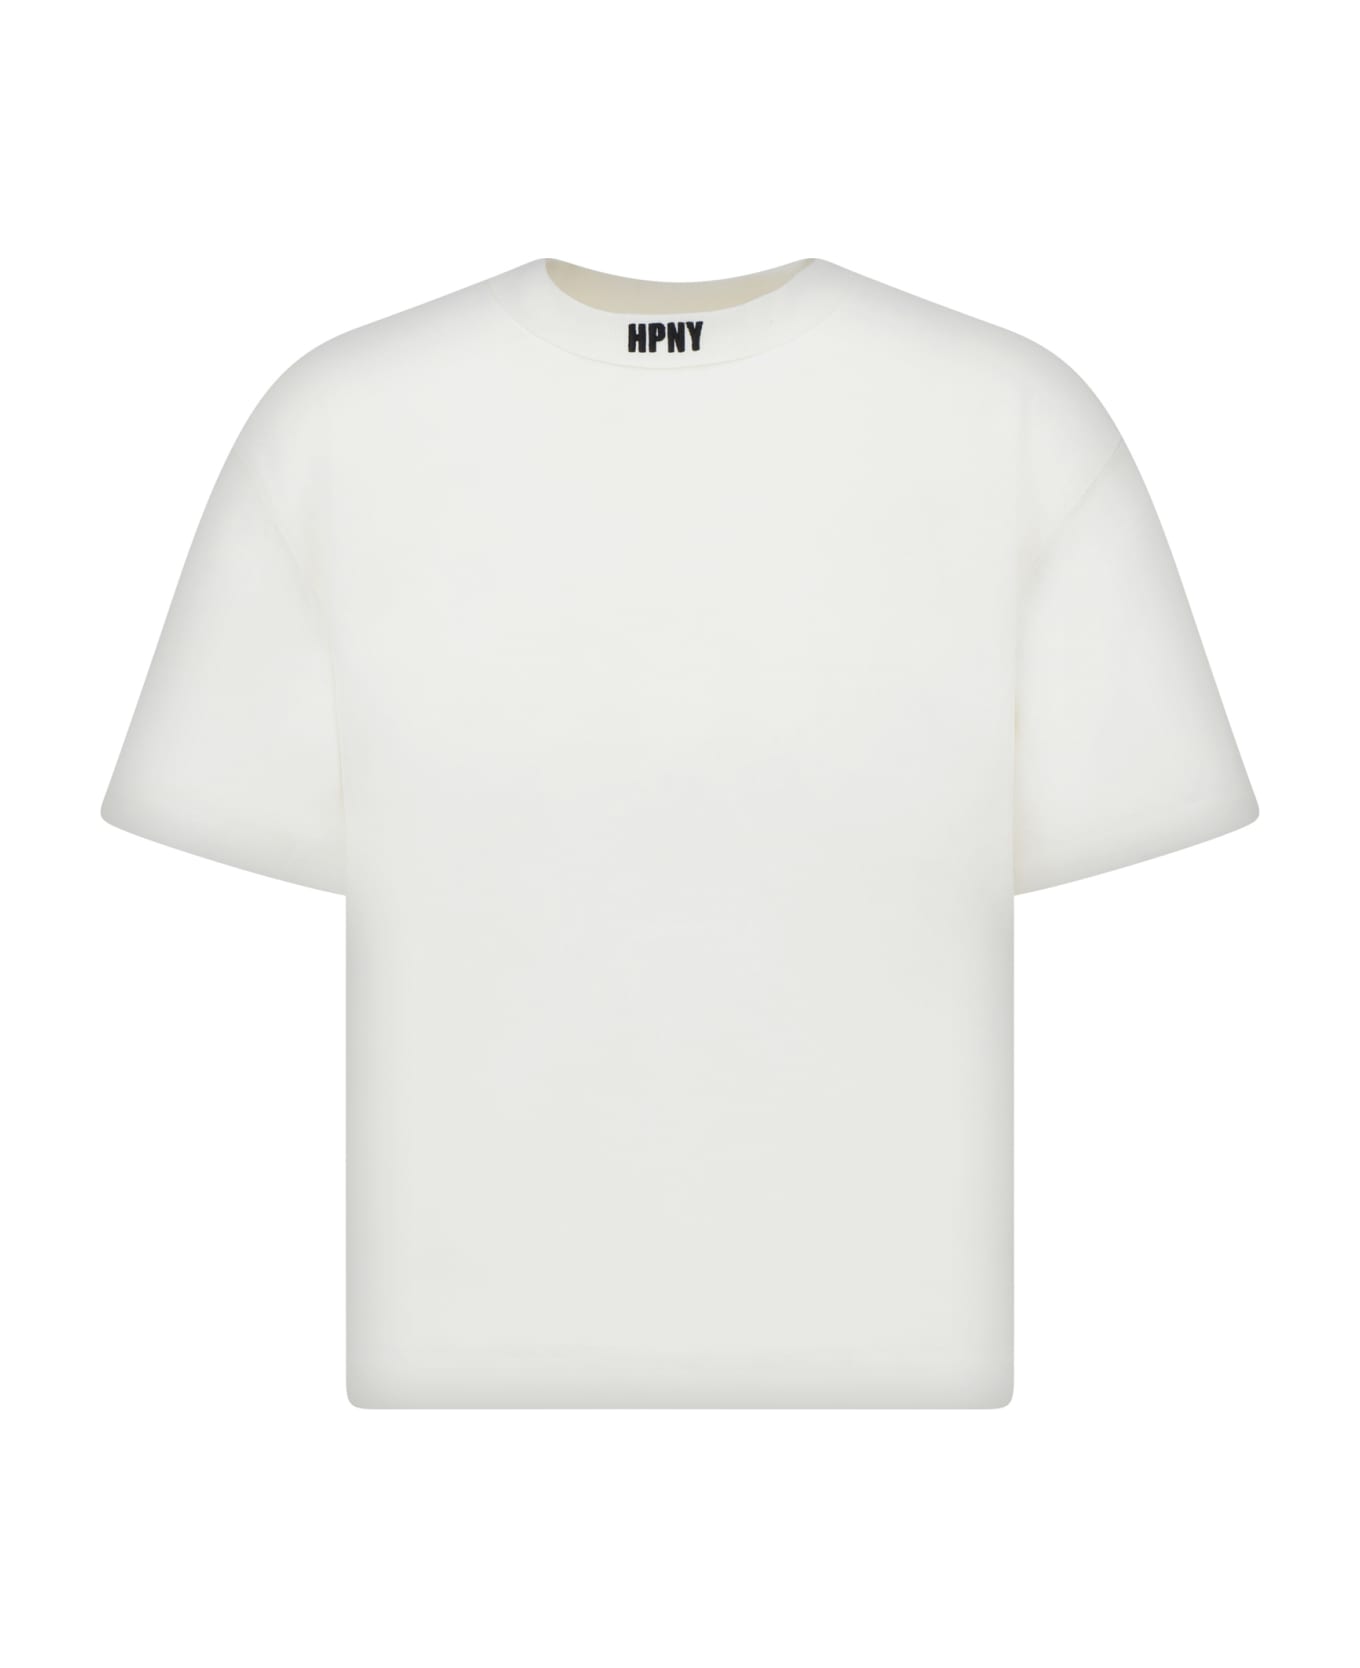 HERON PRESTON T-shirt - White Black